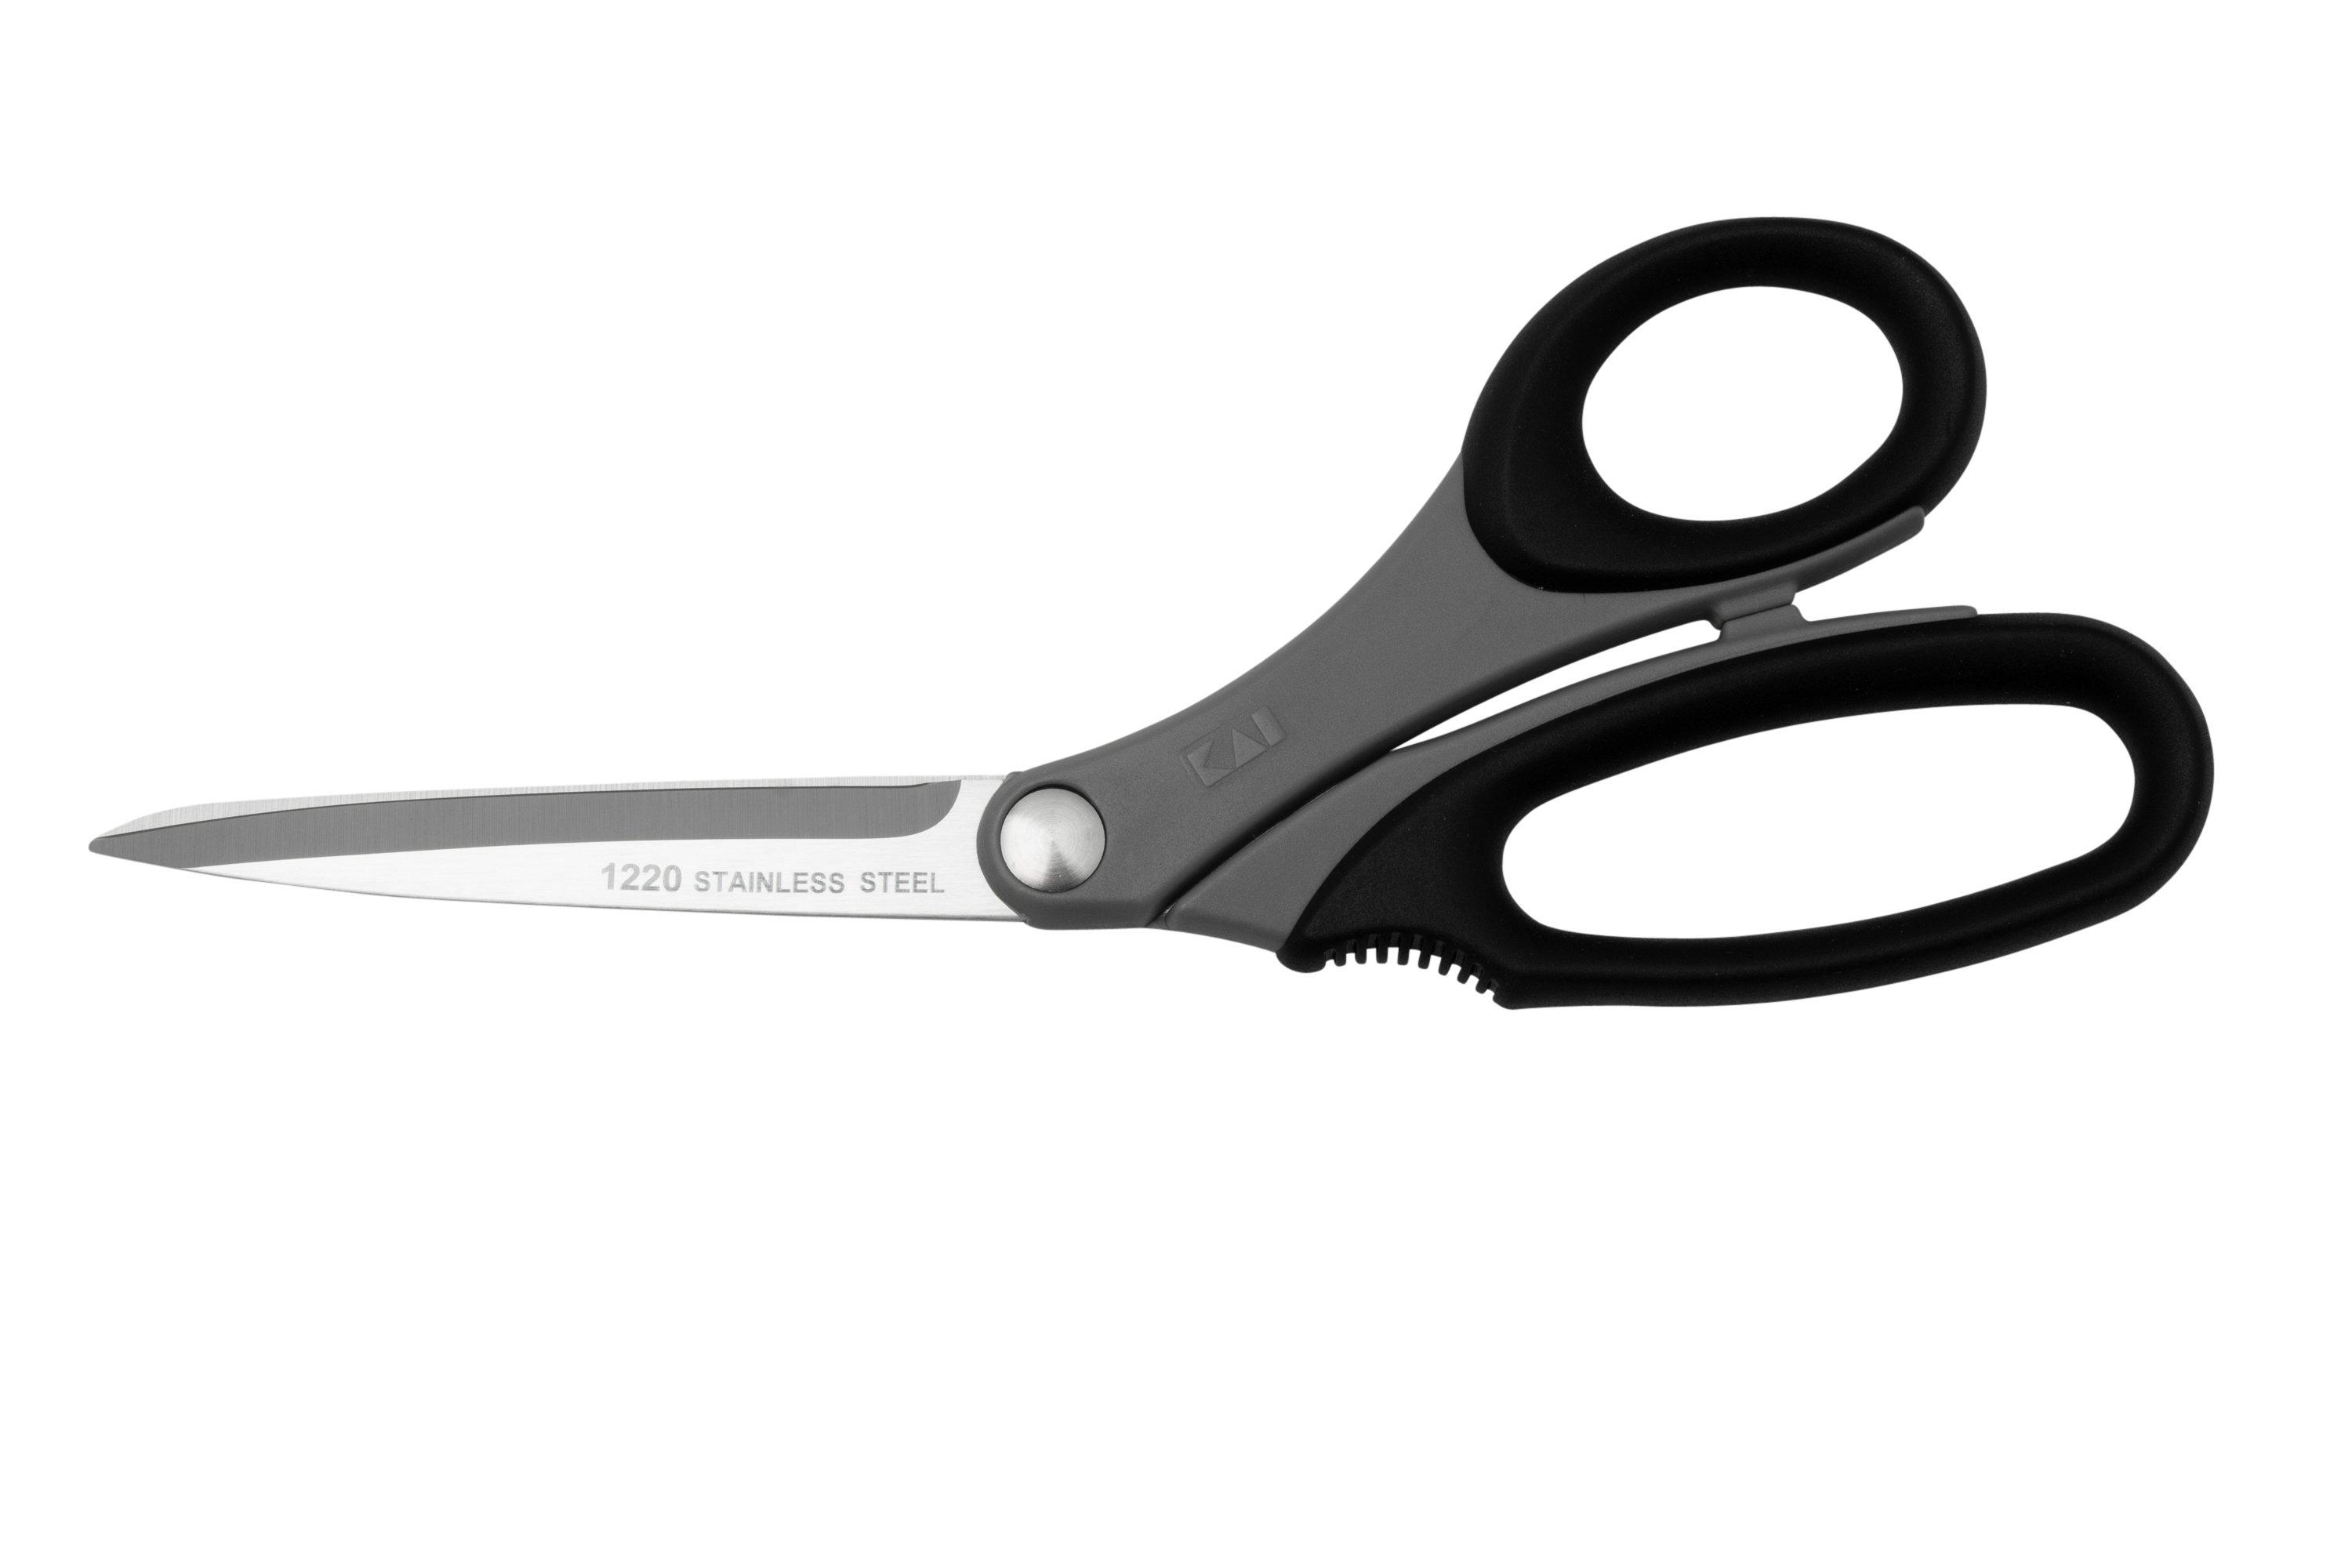 Kershaw Skeeter 3, 1216X scissors  Advantageously shopping at